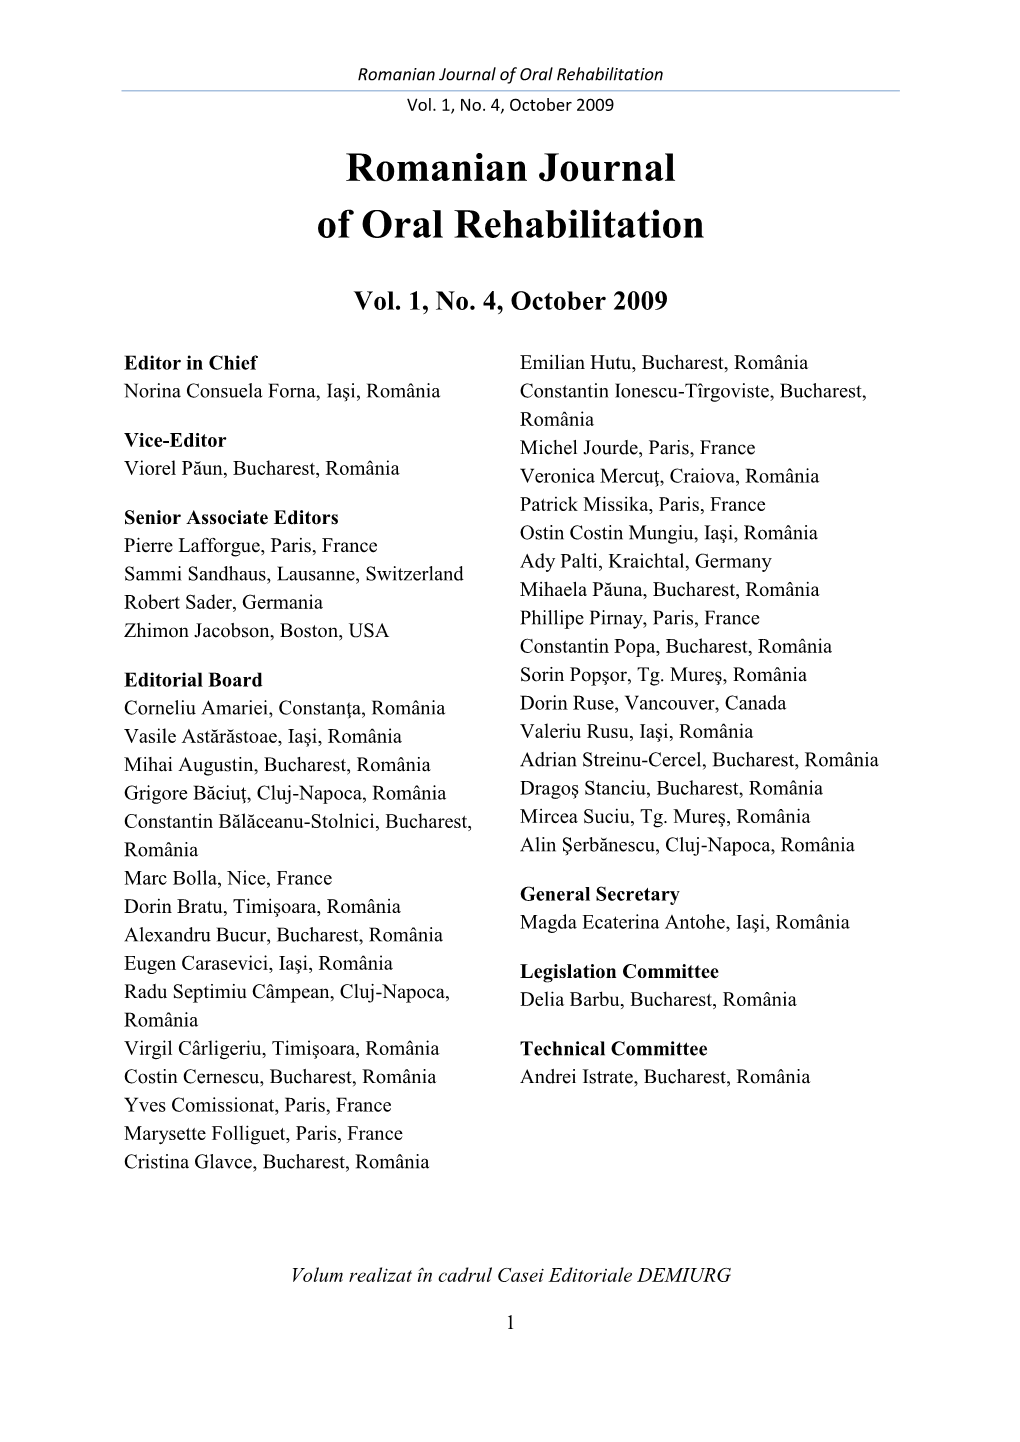 Romanian Journal of Oral Rehabilitation Vol. 1, No. 4, October 2009